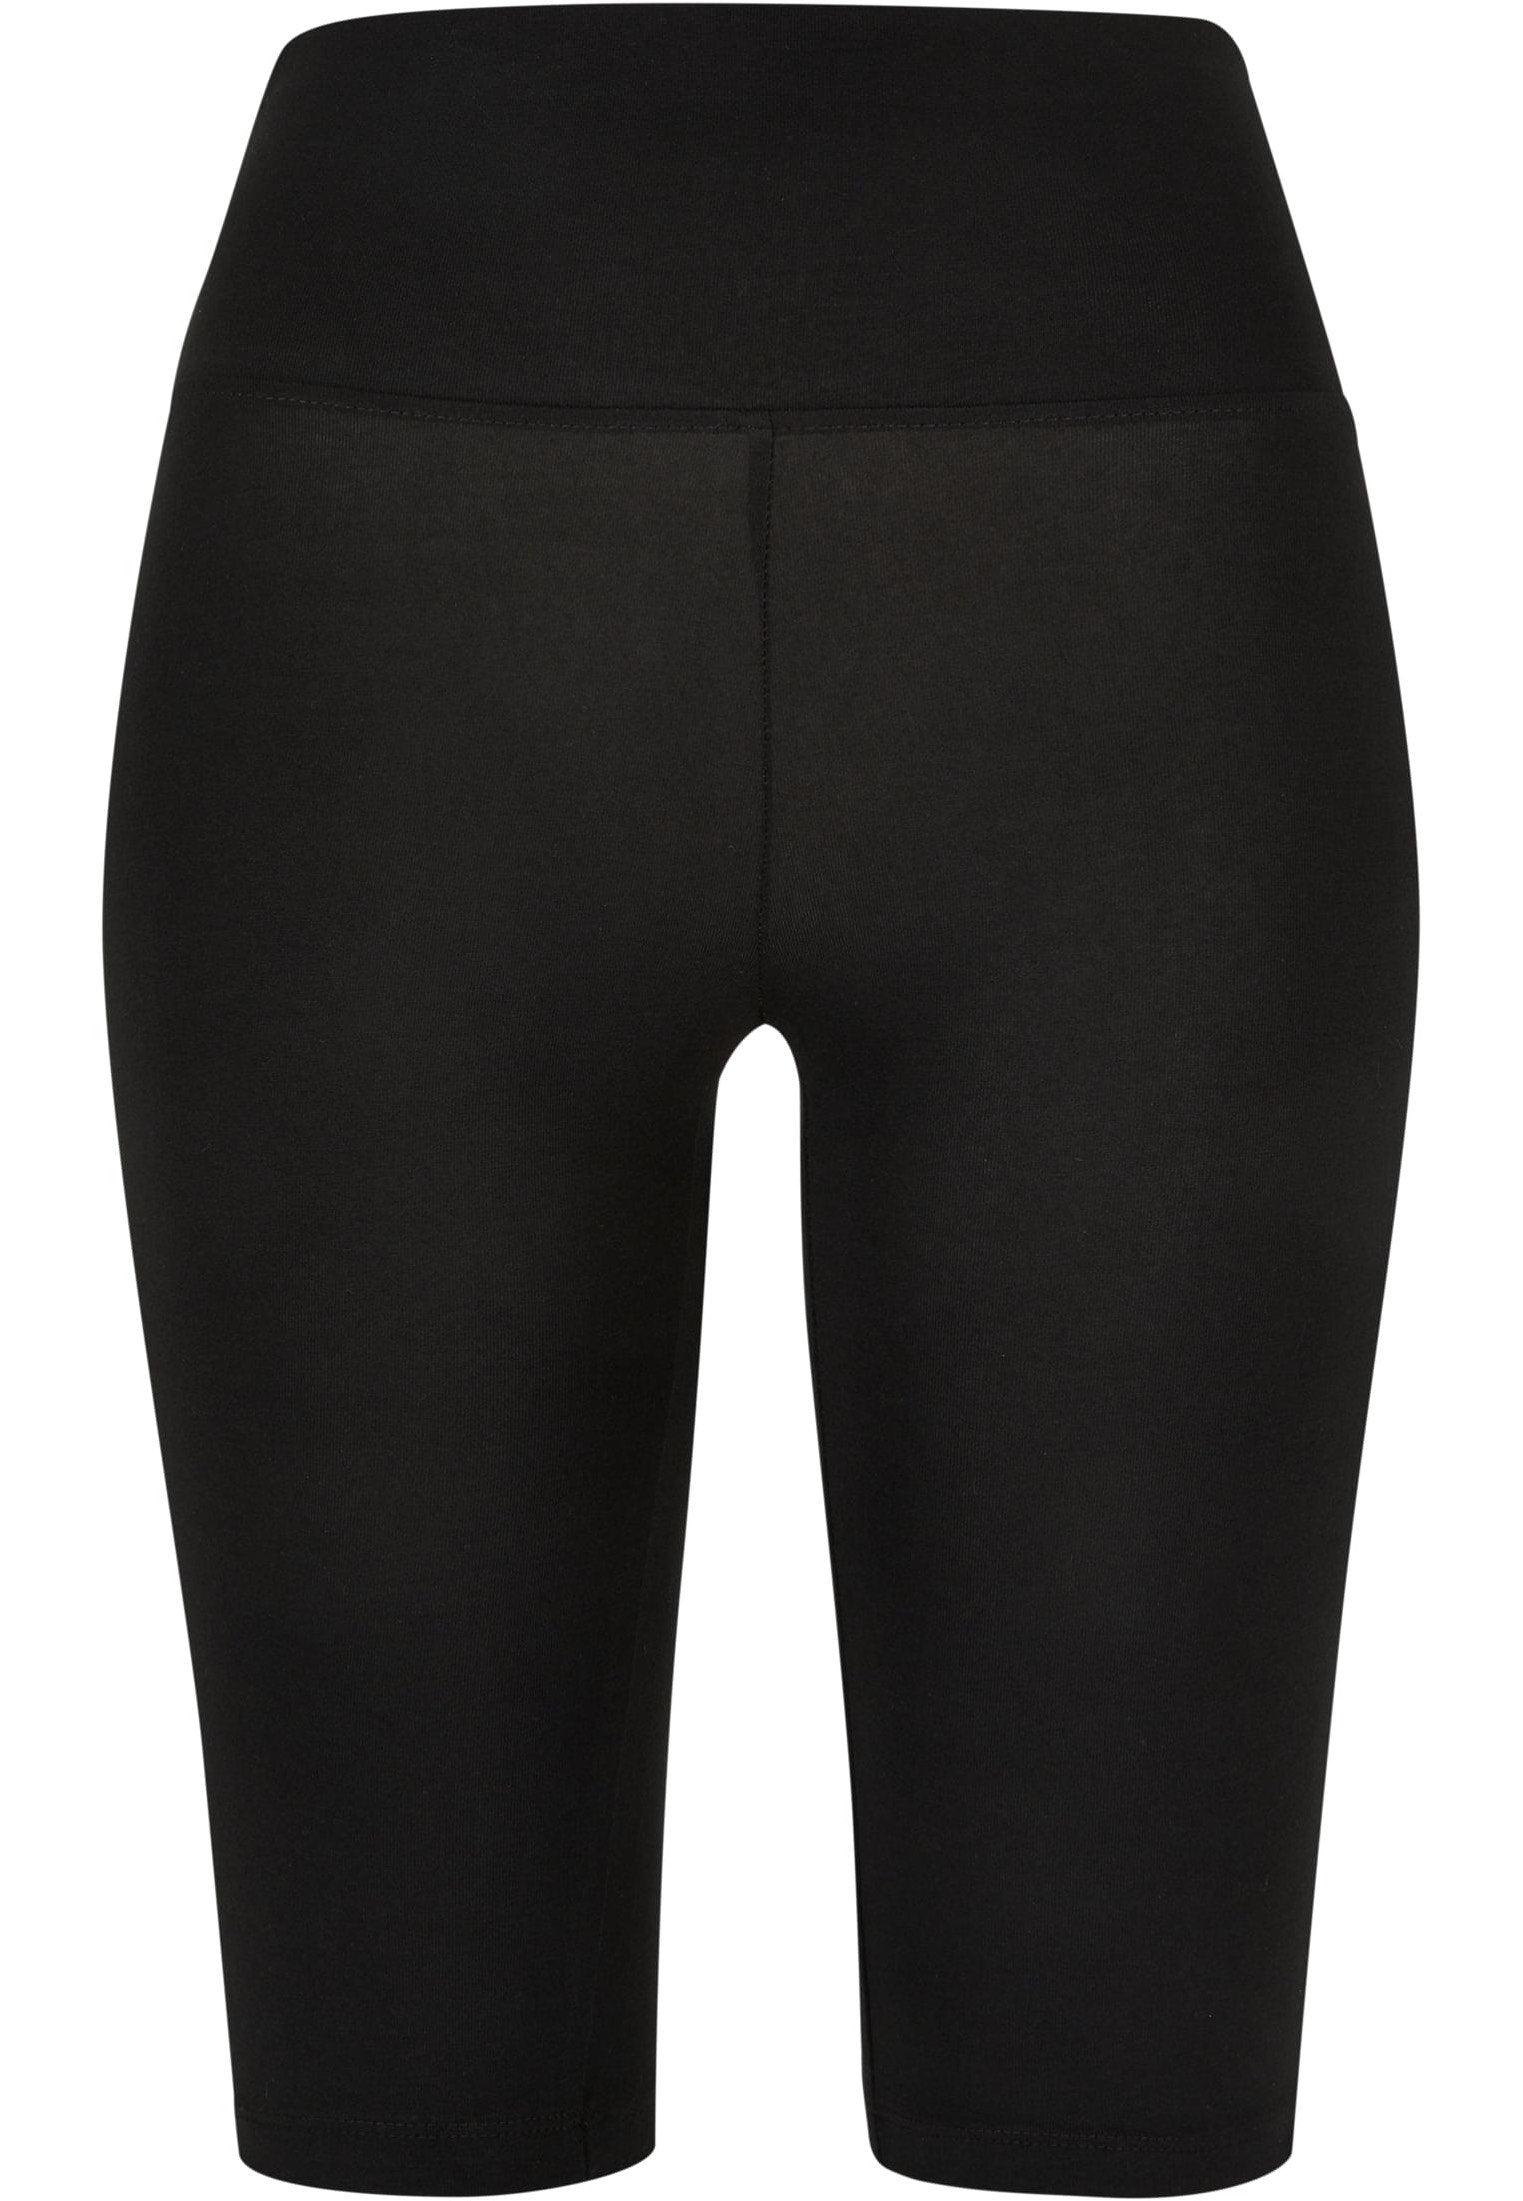 Urban Classics - Ladies Organic Stretch Jersey Cycle Black - Shorts